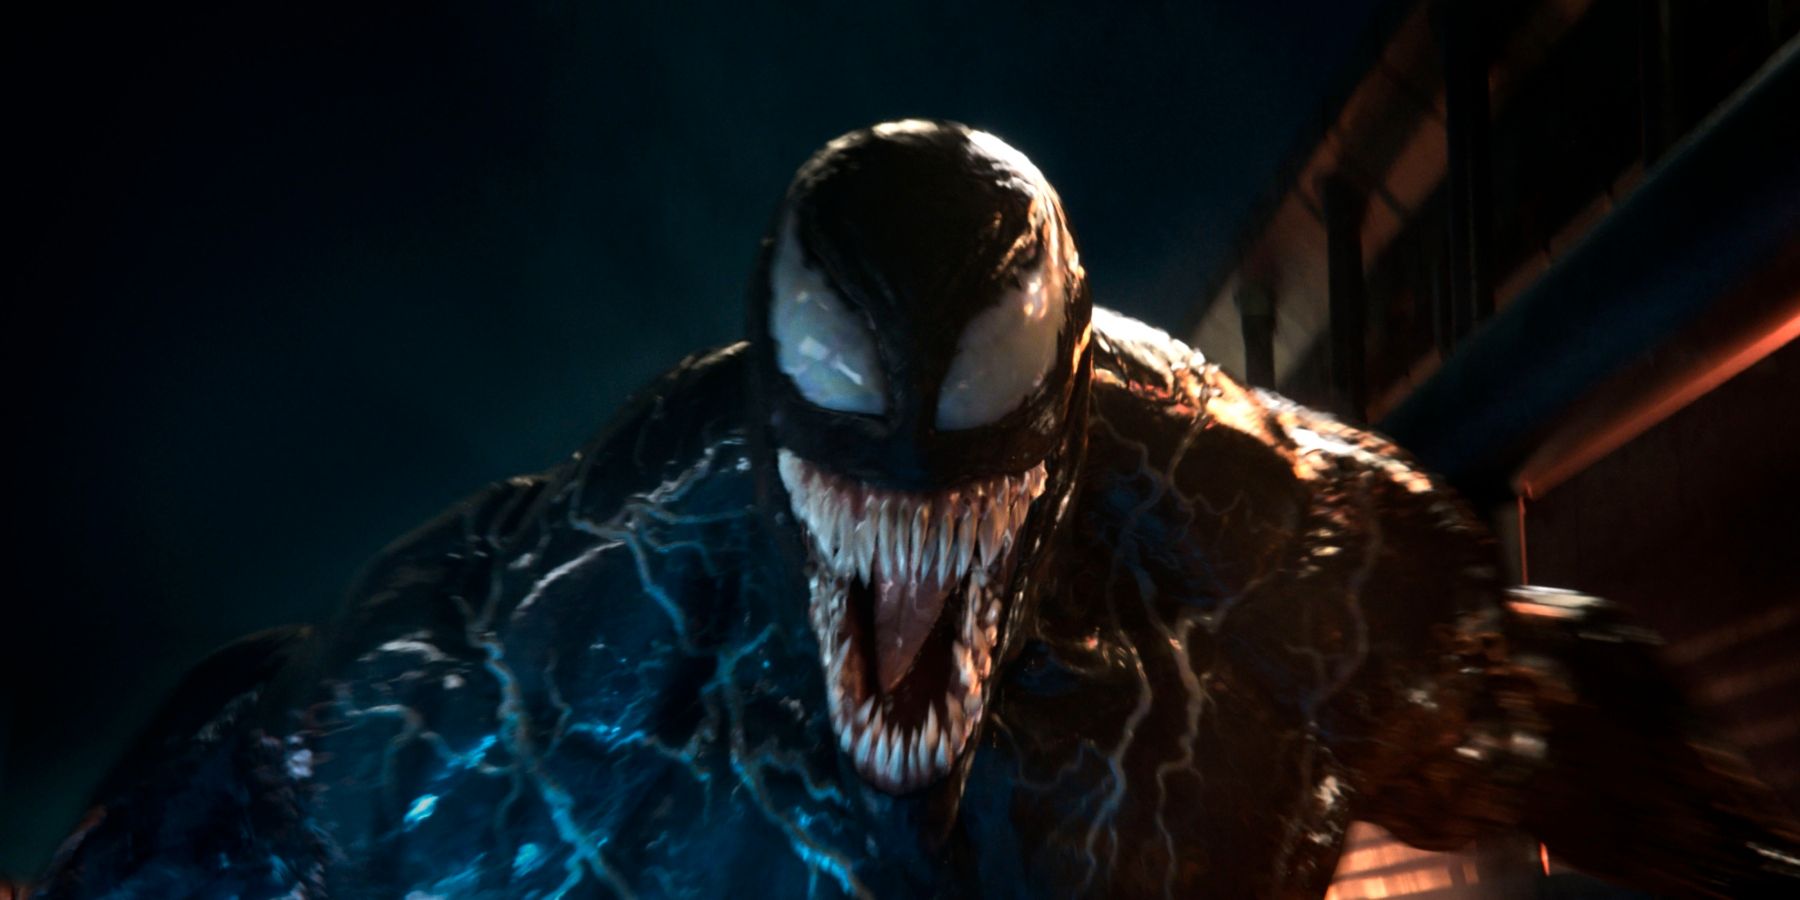 Venom 2-ის პოსტ-კრედიტების სცენას აქვს დამაფიქრებელი შედეგები ტომ ჰარდის ვენომზე